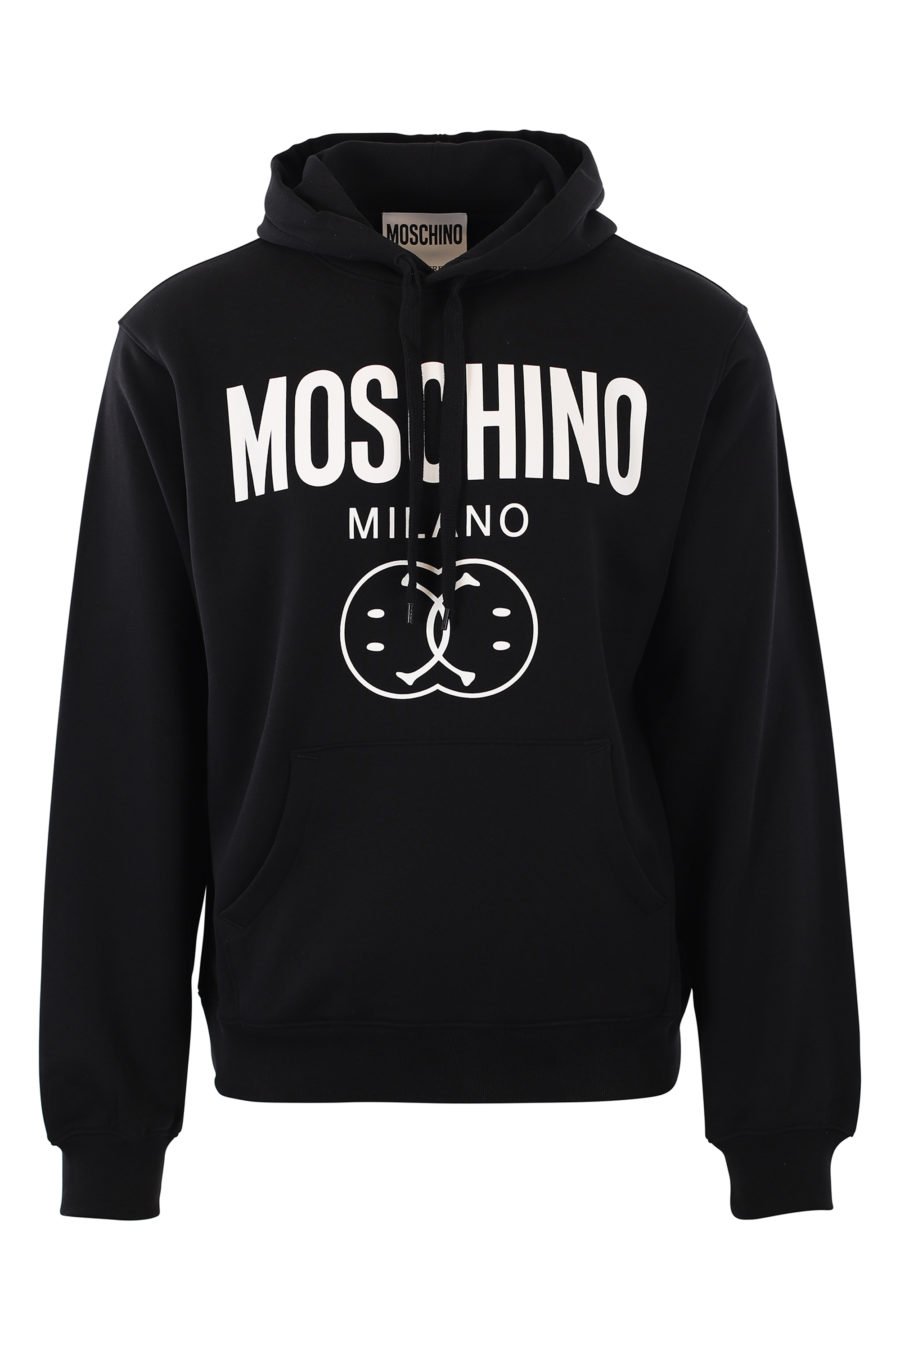 Schwarzes Kapuzensweatshirt mit milano "smiley" Logo - IMG 2423